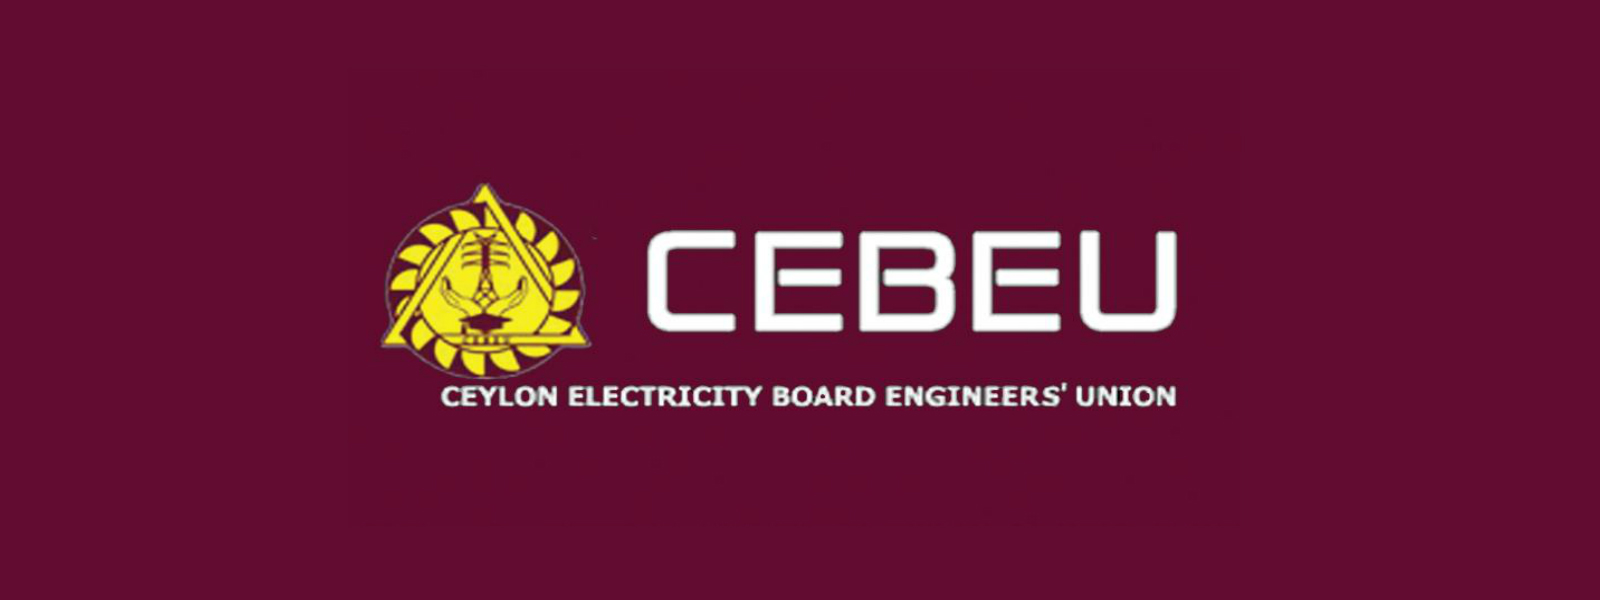 CEB Engineer's threatens to strike